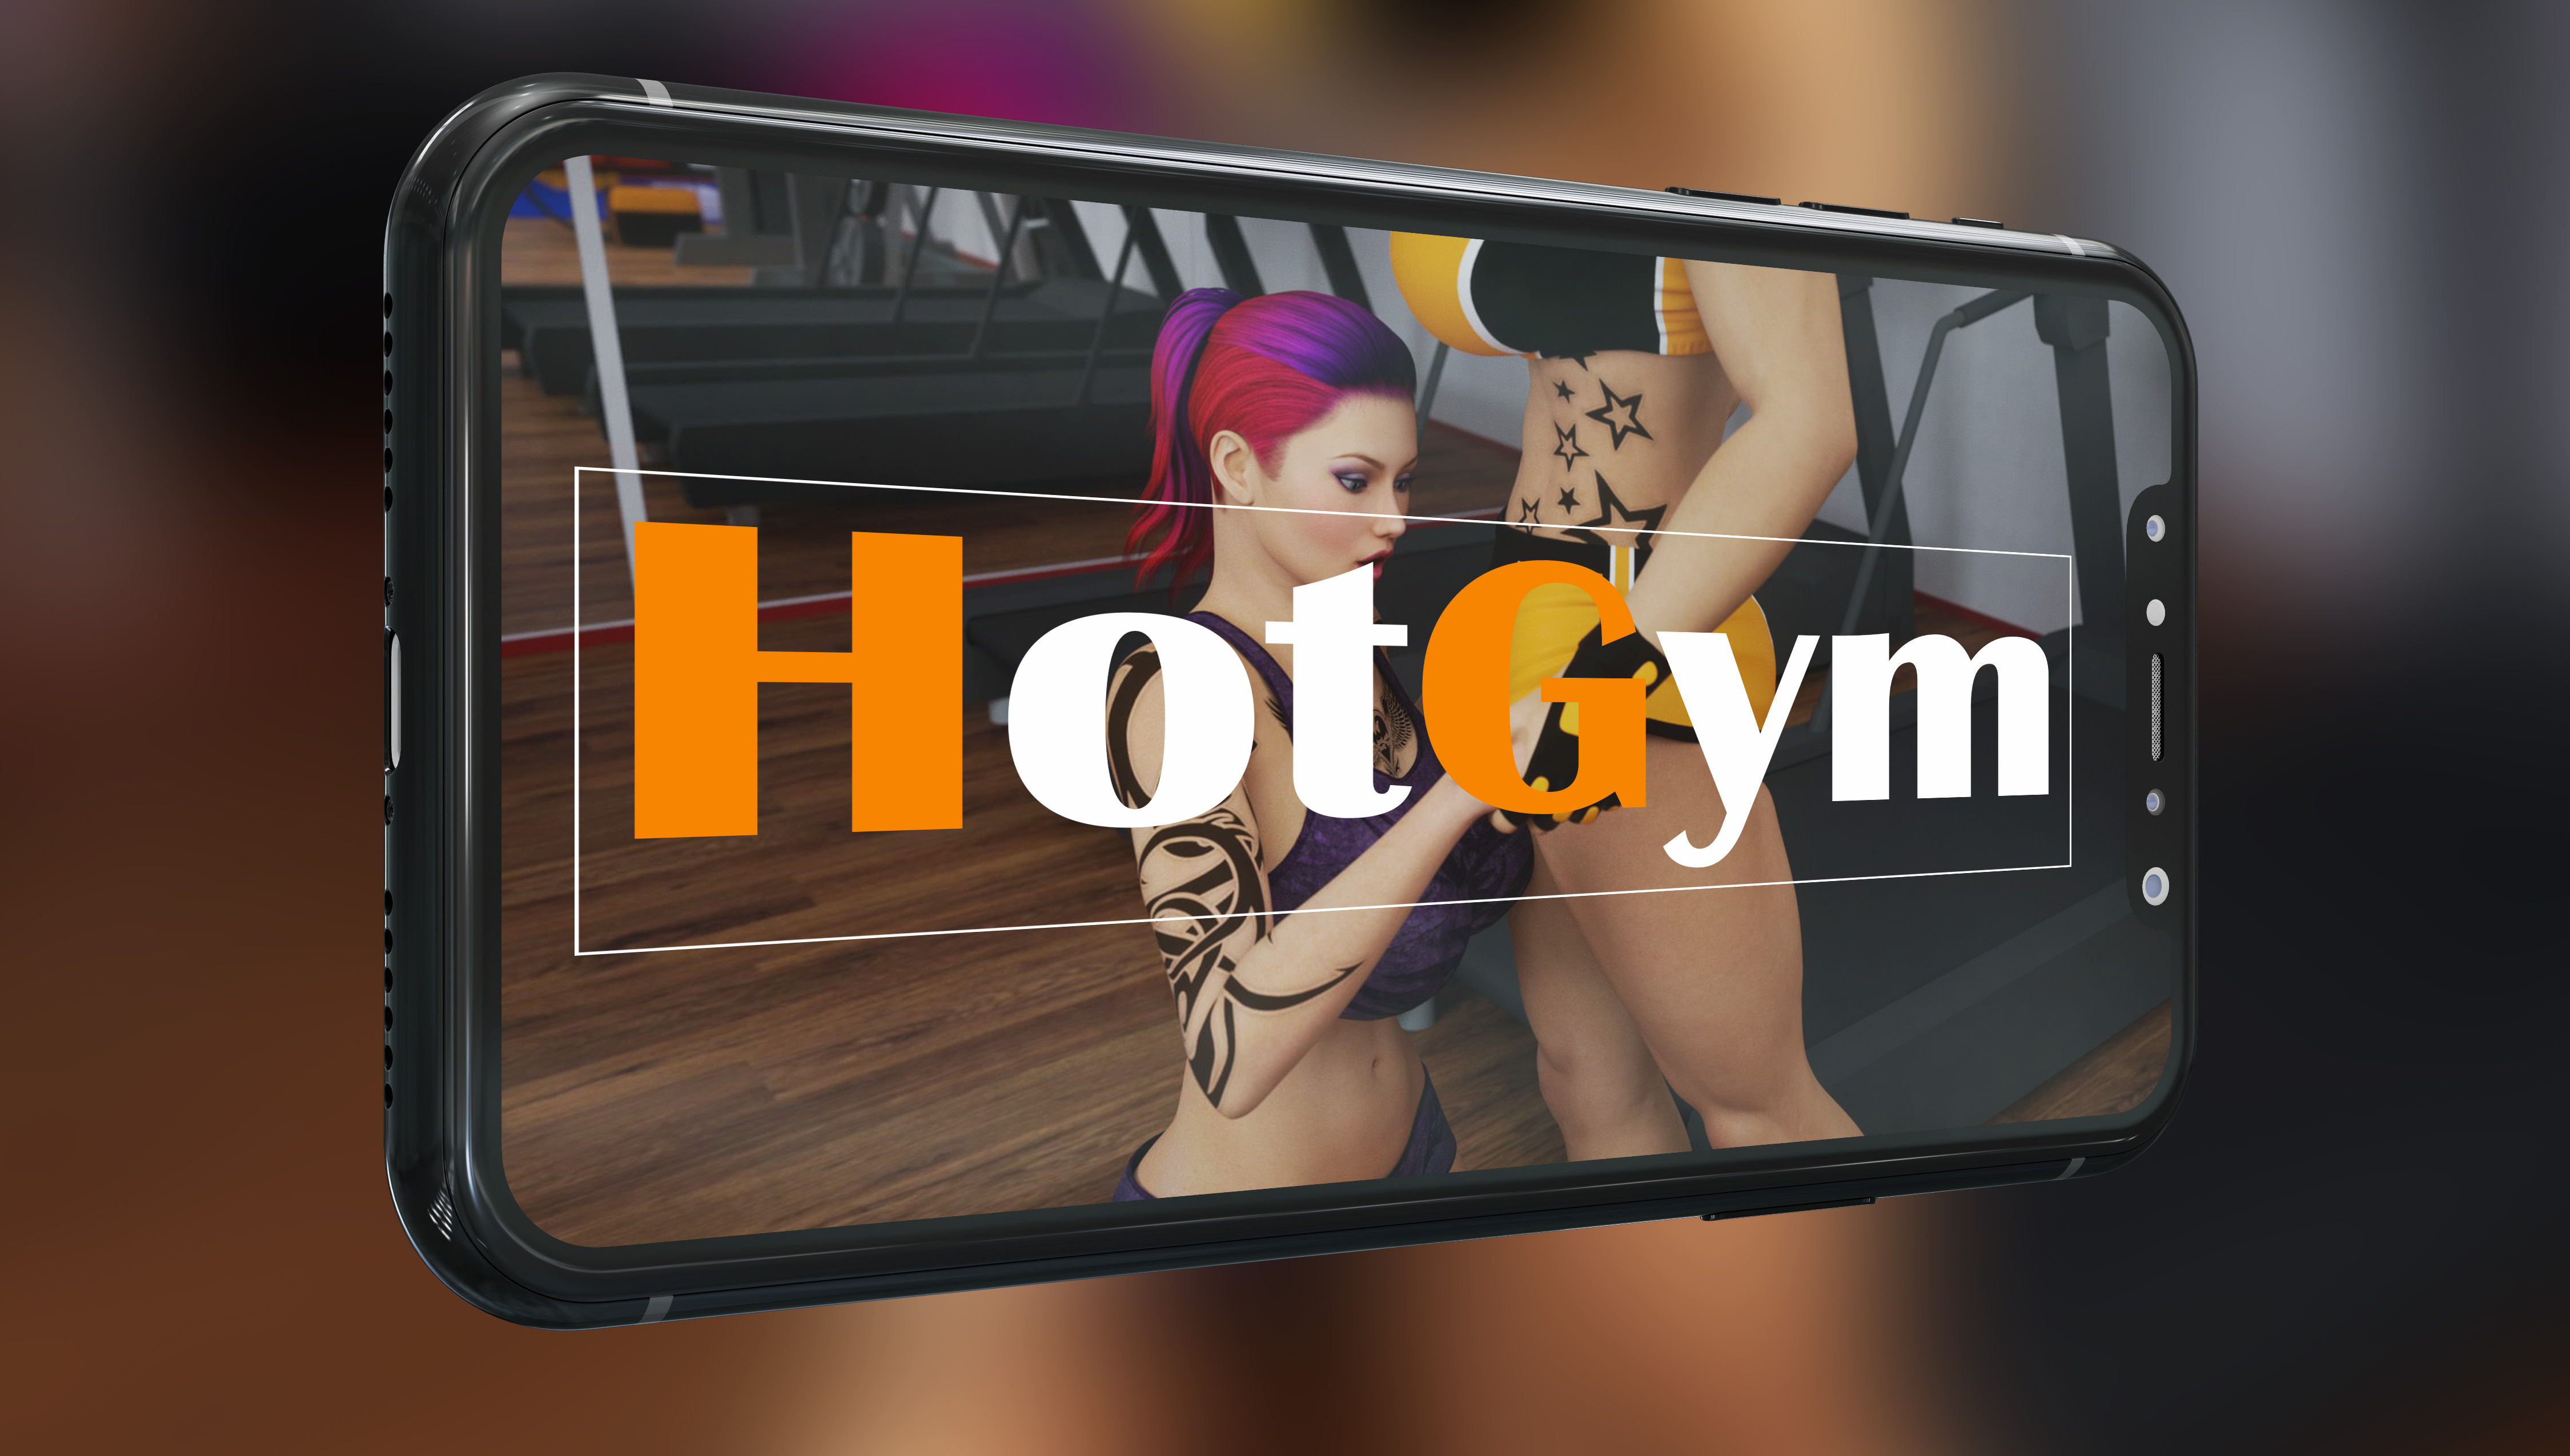 Hot Gym / Горячий Тренажерный Зал [2021] [Uncen] [ADV] [Android Compatible] [RUS] Air Games